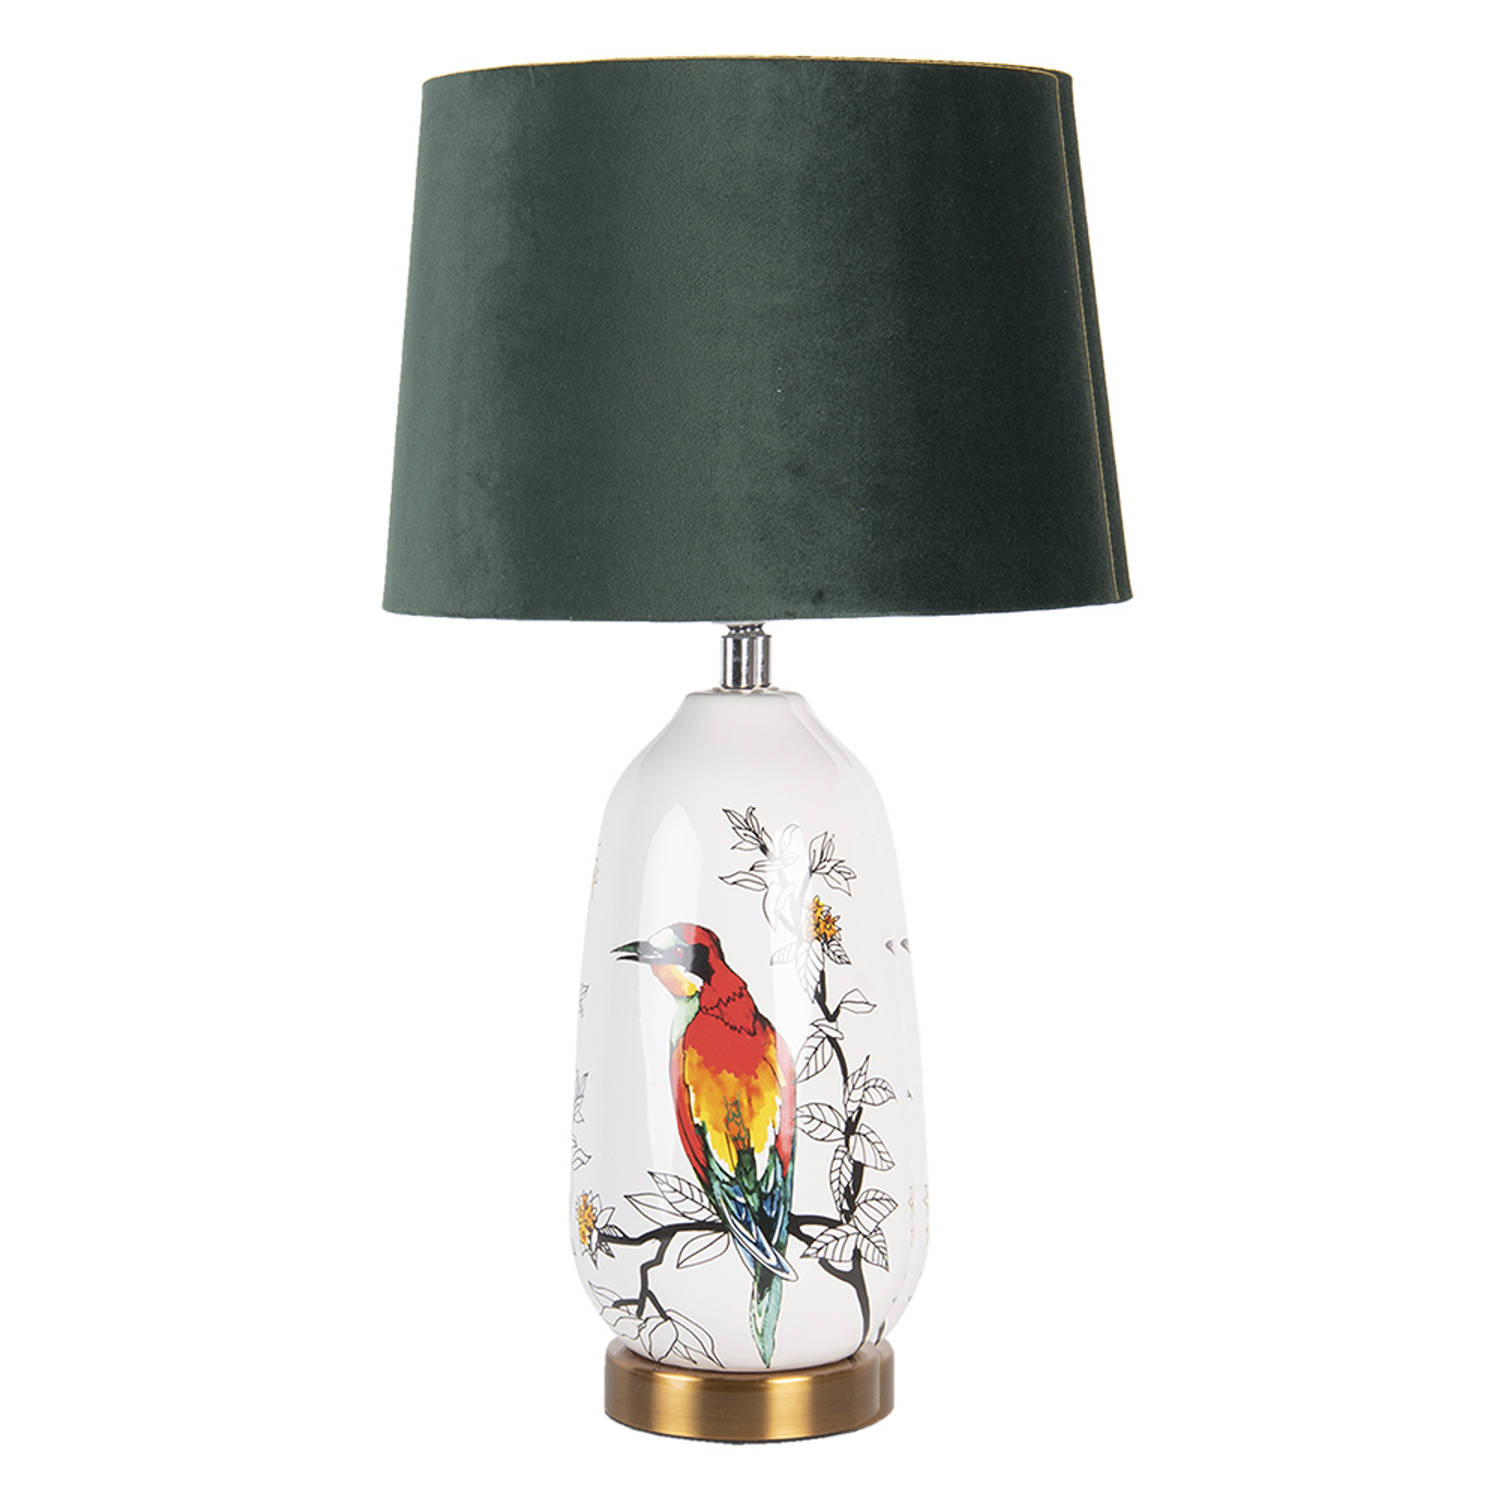 HAES DECO Tafellamp Modern Chic Vogel bedrukte Lamp, Ø 28*50 cm Goudkleurig Bureaulamp, Sfeerlamp, N